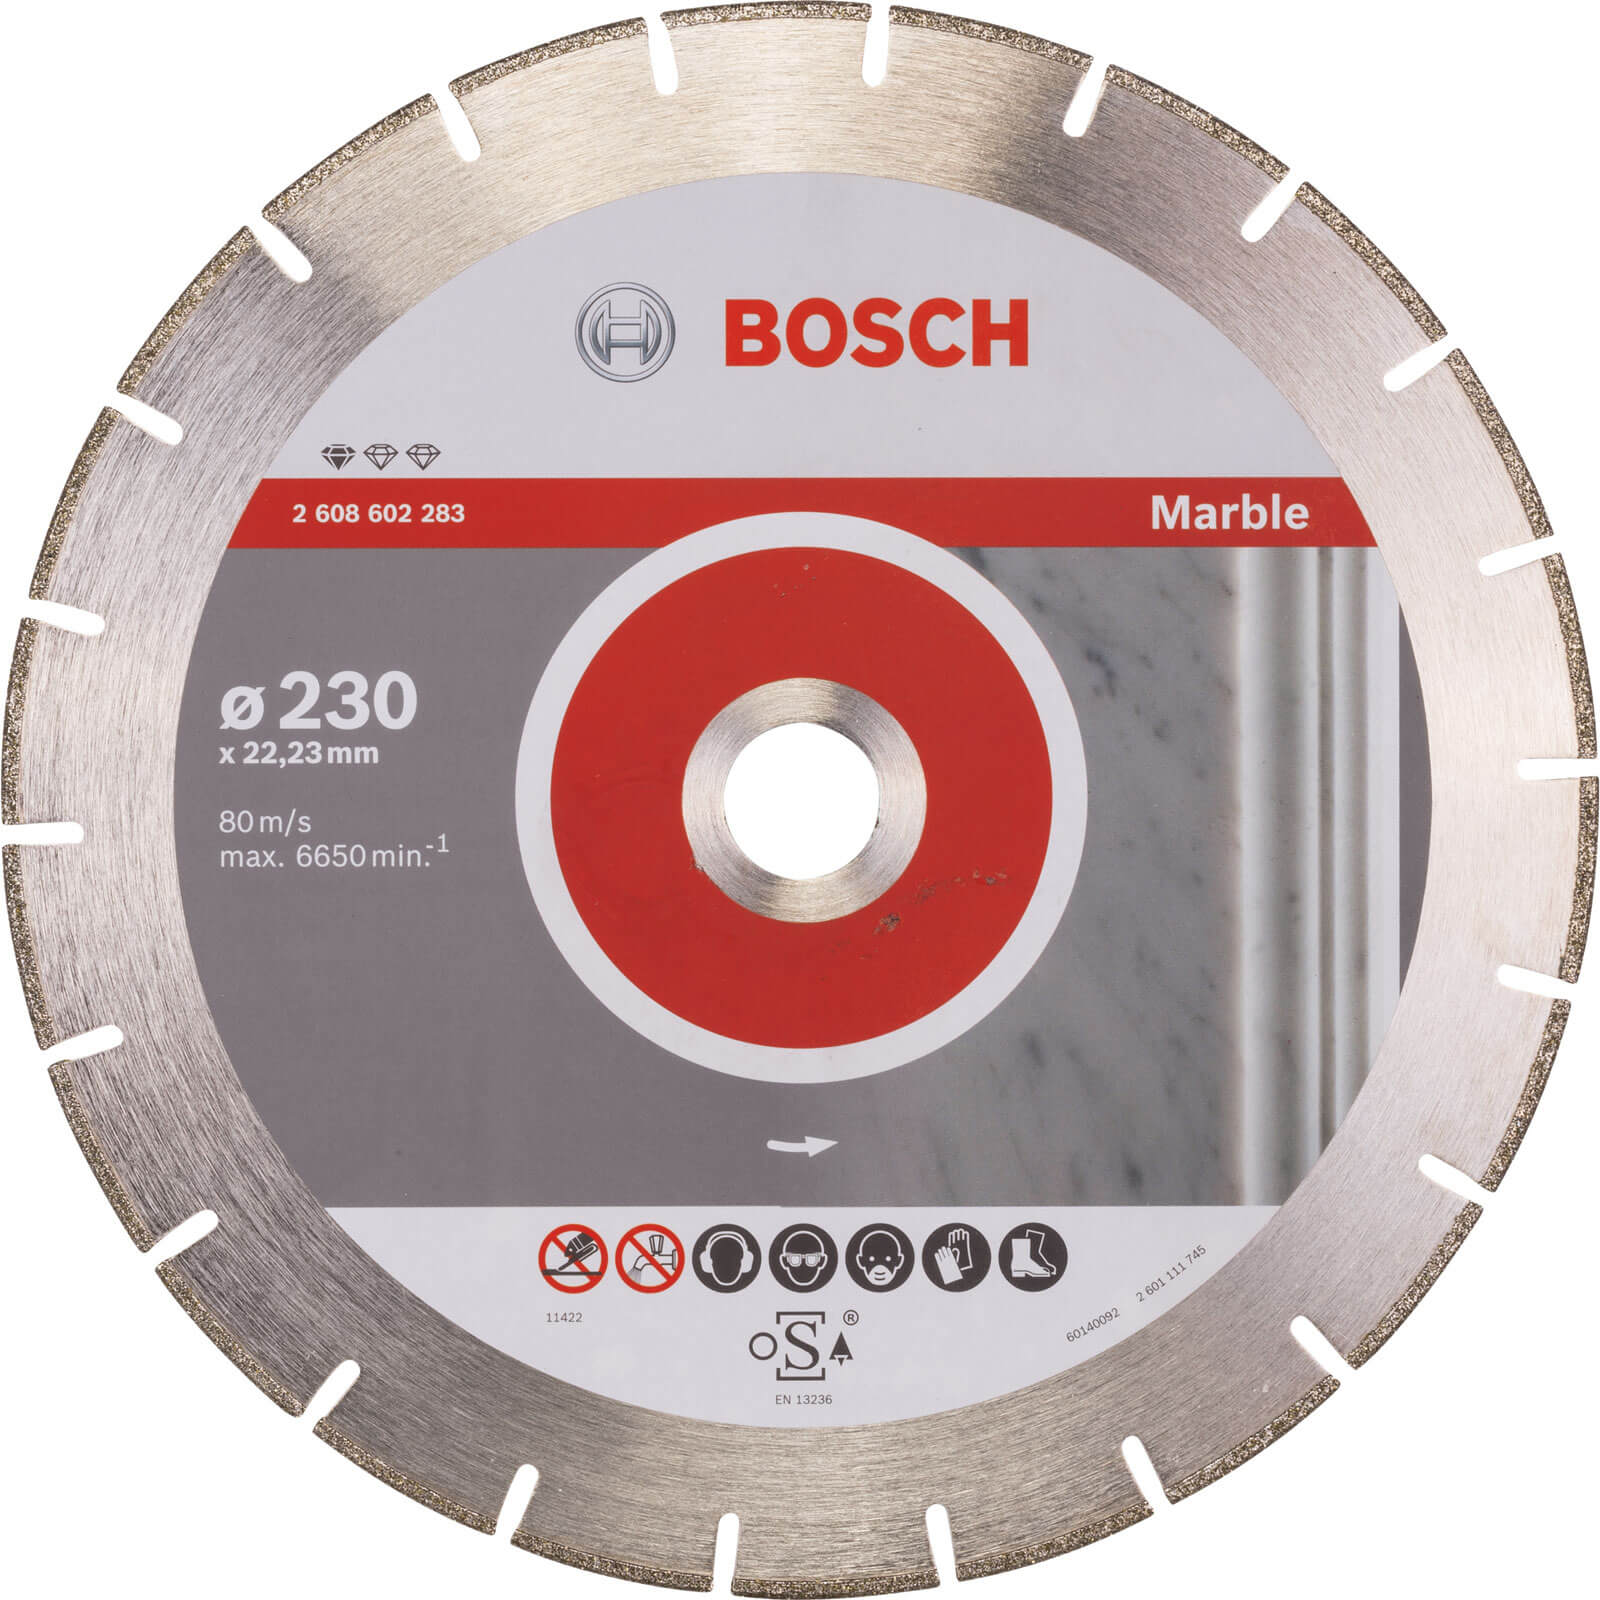 Photos - Cutting Disc Bosch Diamond Disc for Marble 230mm 2608602283 